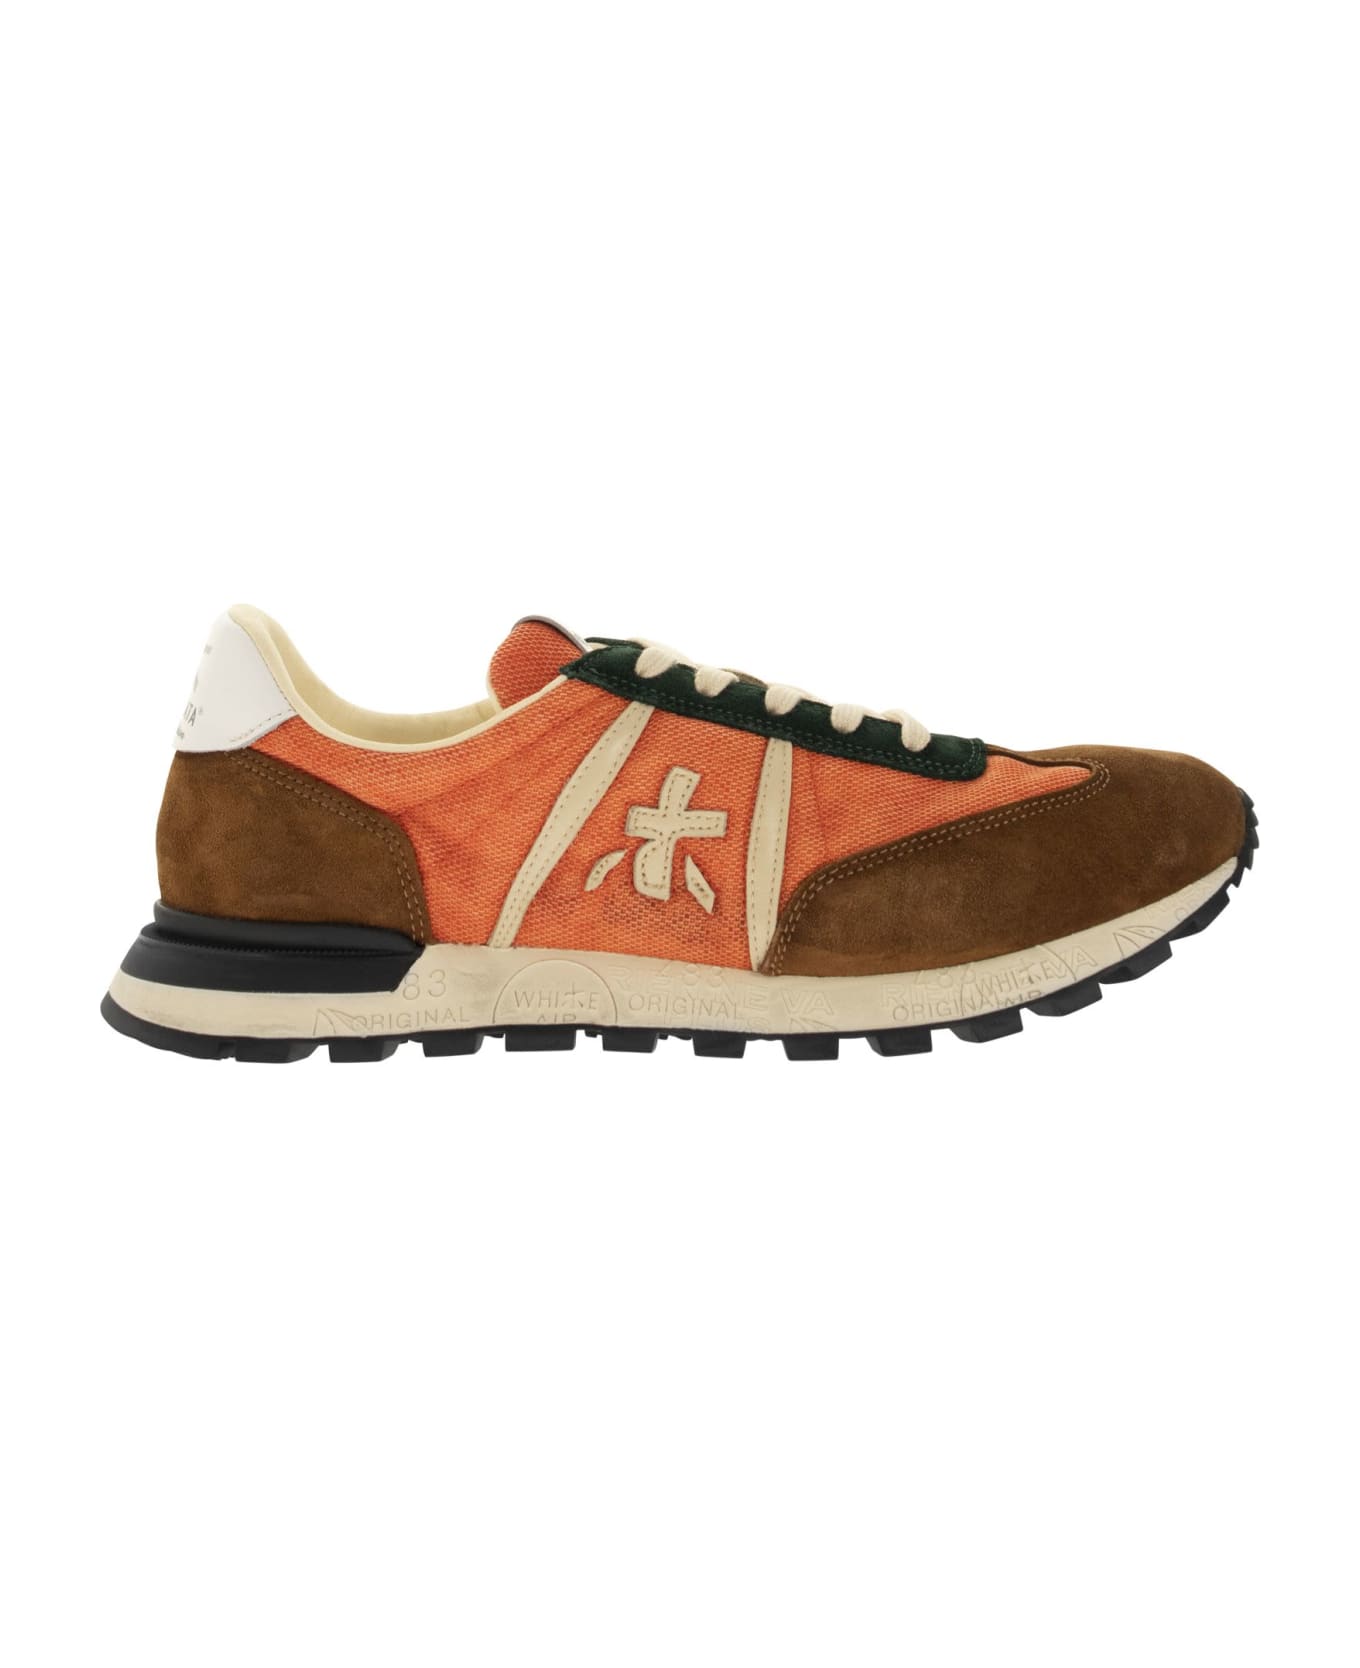 Premiata Johnlow 5981 - Sneakers - Arancione